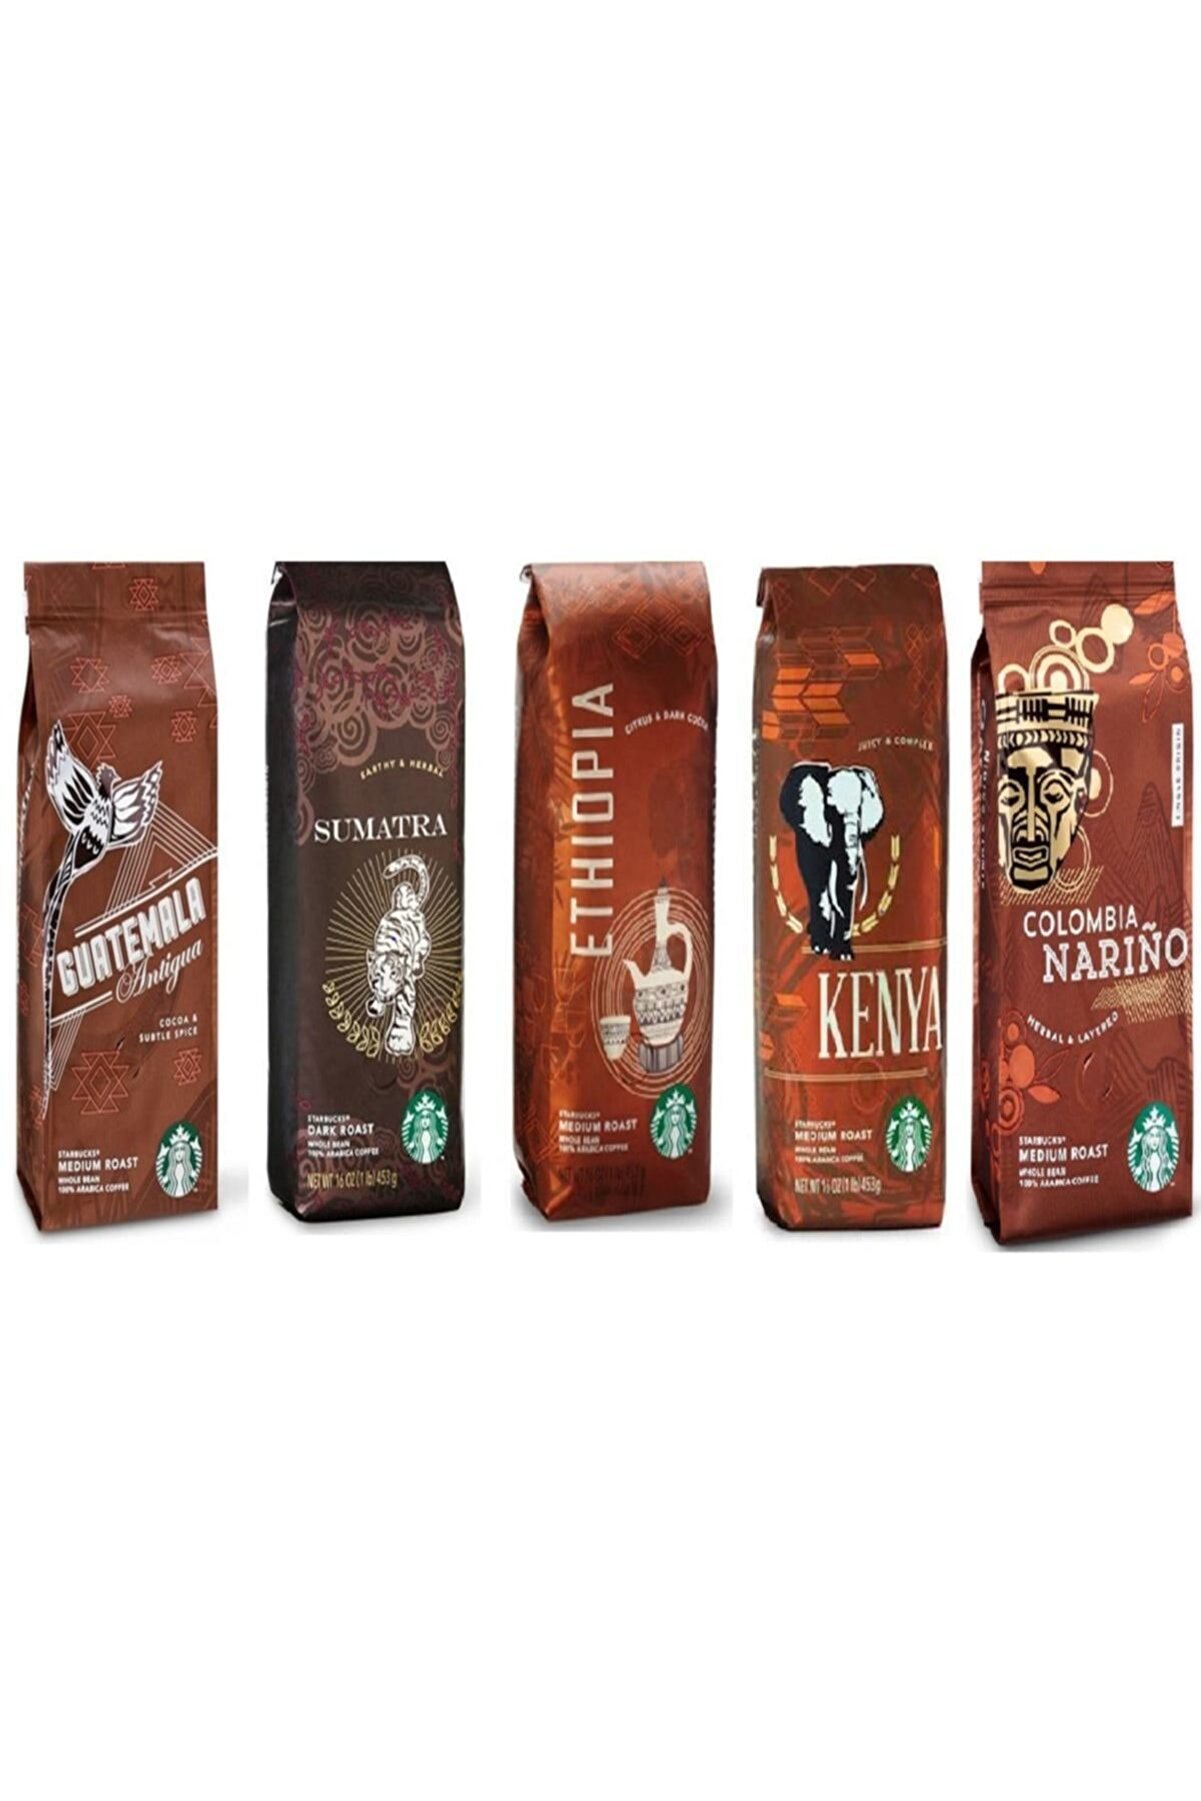 Starbucks Deneme Paketi Filtre Kahve 5x250 Gr 5 Paket French Press Için Çekilmiş